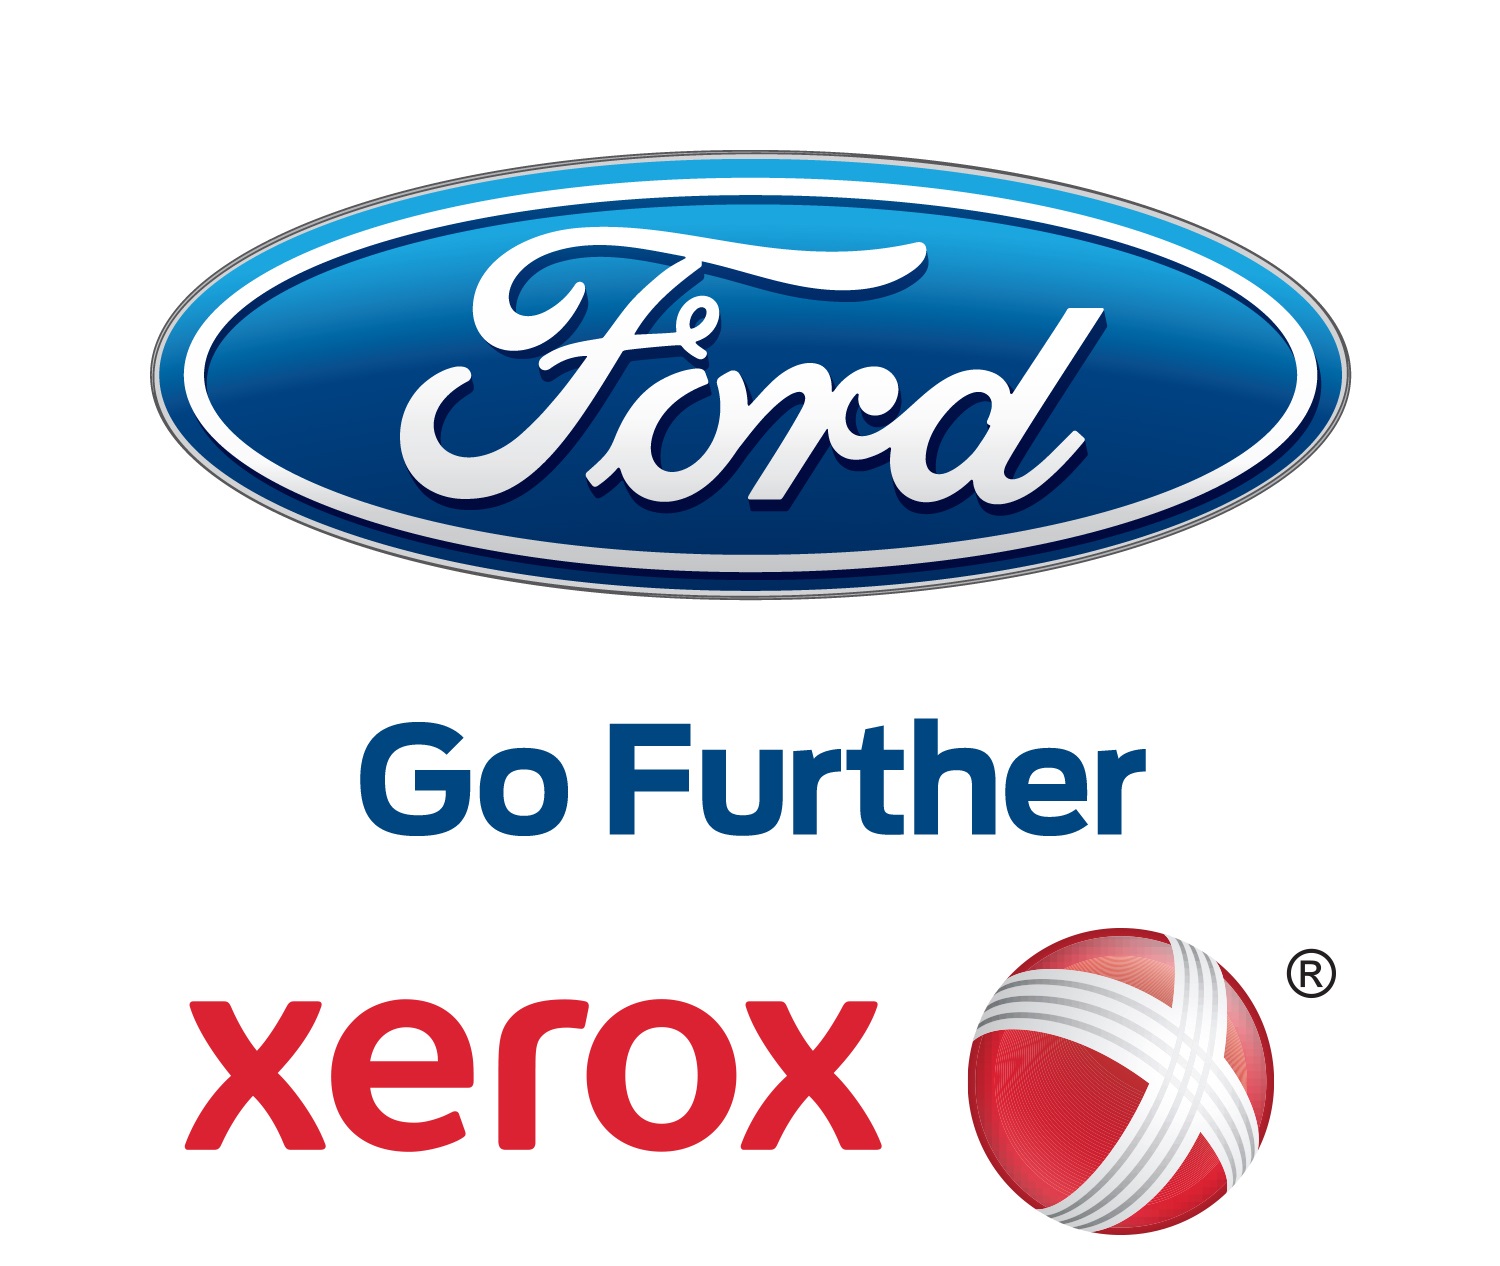 2016 Annual Enrollment Ford eGuide Redesign- Logo